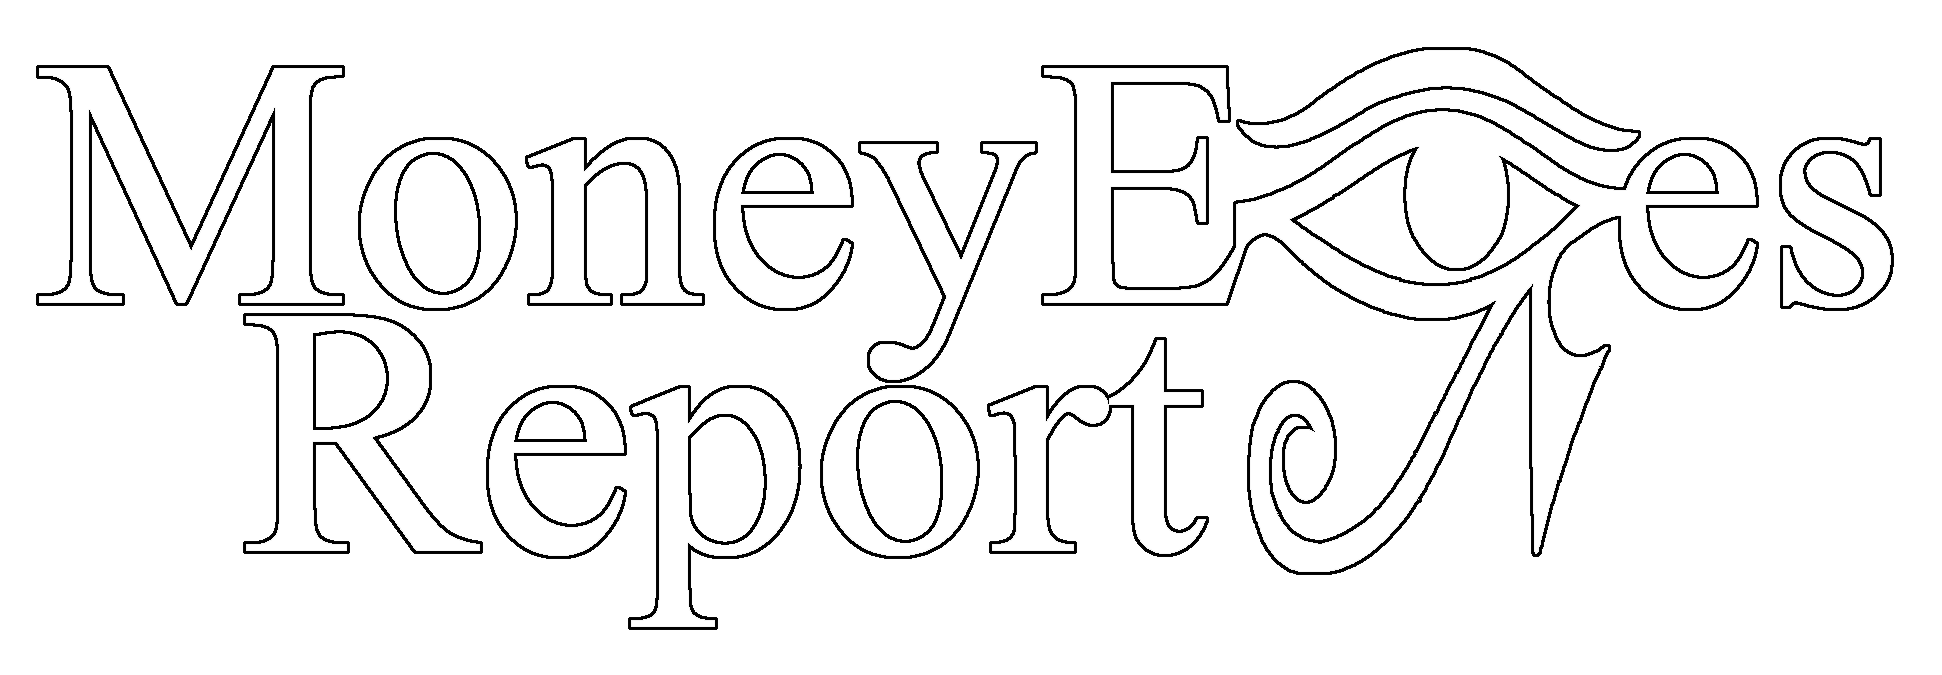 MoneyEyes Report